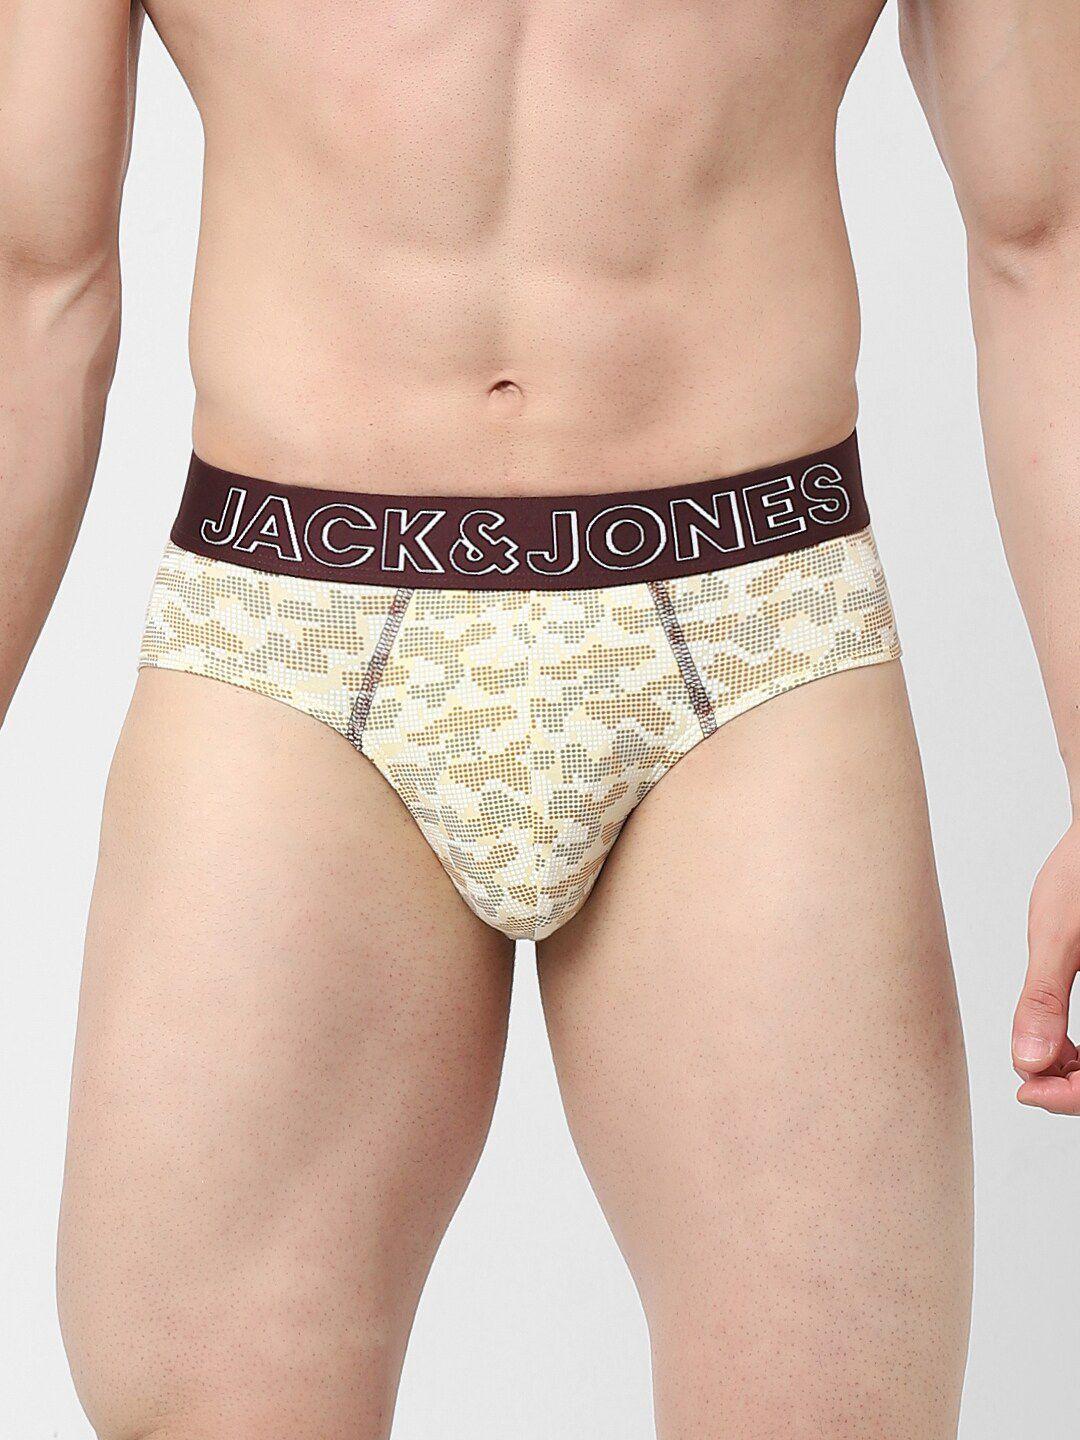 jack-&-jones-men-beige-printed-basic-cotton-briefs